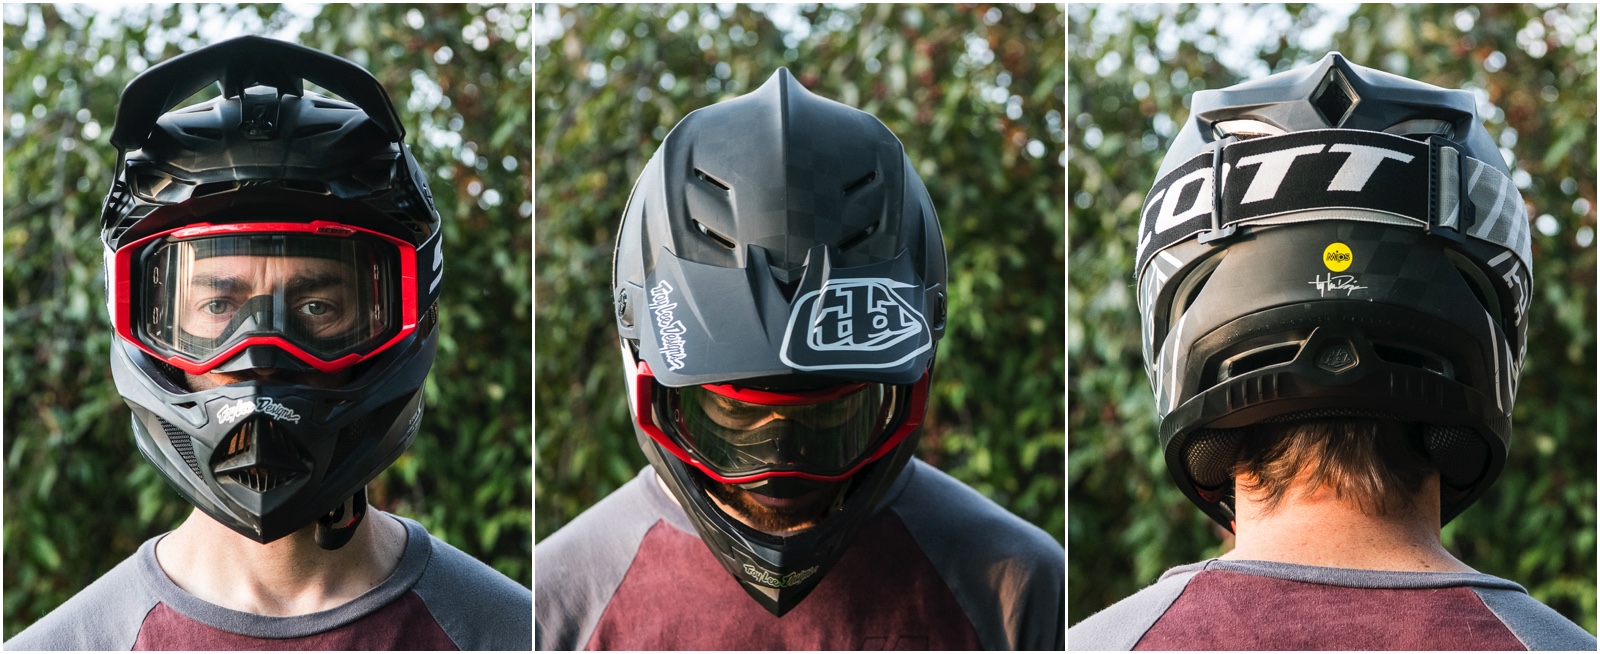 TESTED: Troy Lee Designs SE5 Helmet 